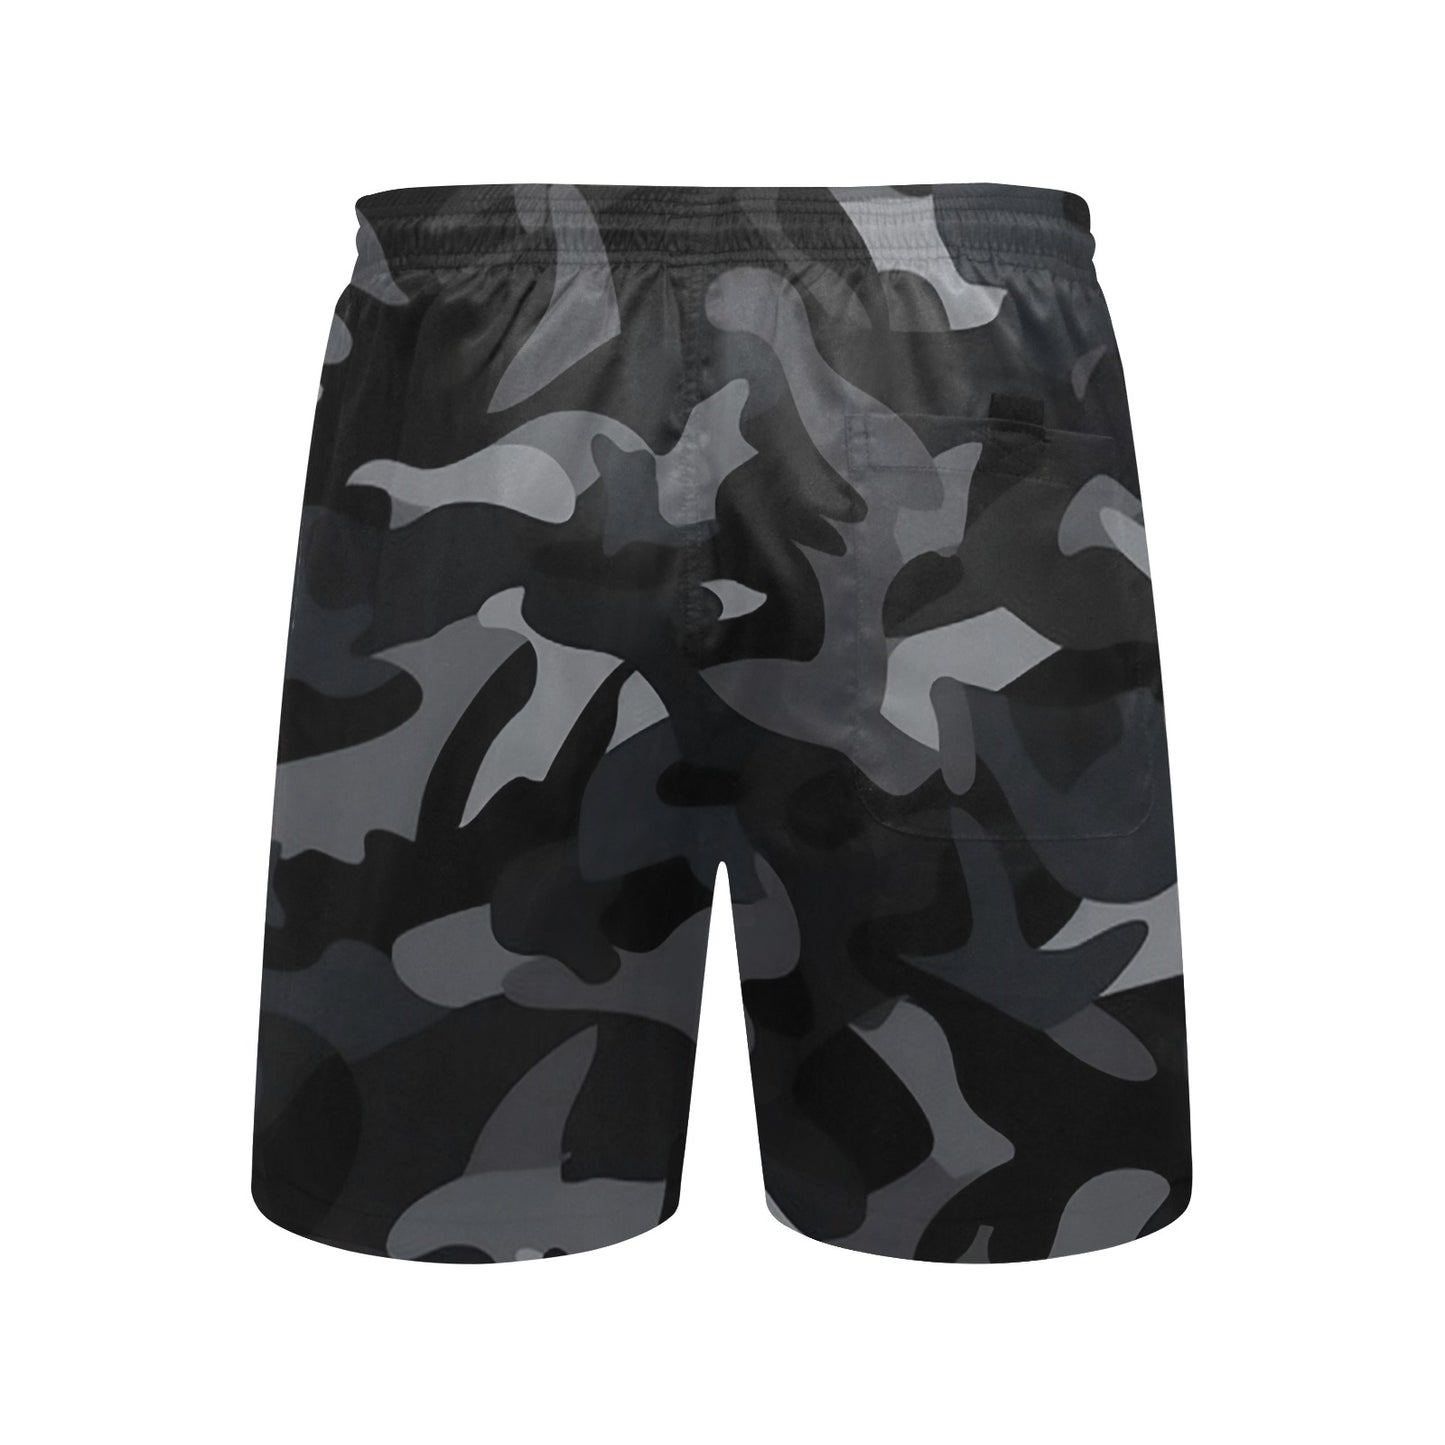 Black Camo Men Swim Trunks, 7" Inseam Shorts Green Camouflage Beach Pockets Mesh Lining Drawstring Casual Bathing Suit Plus Size Swimwear